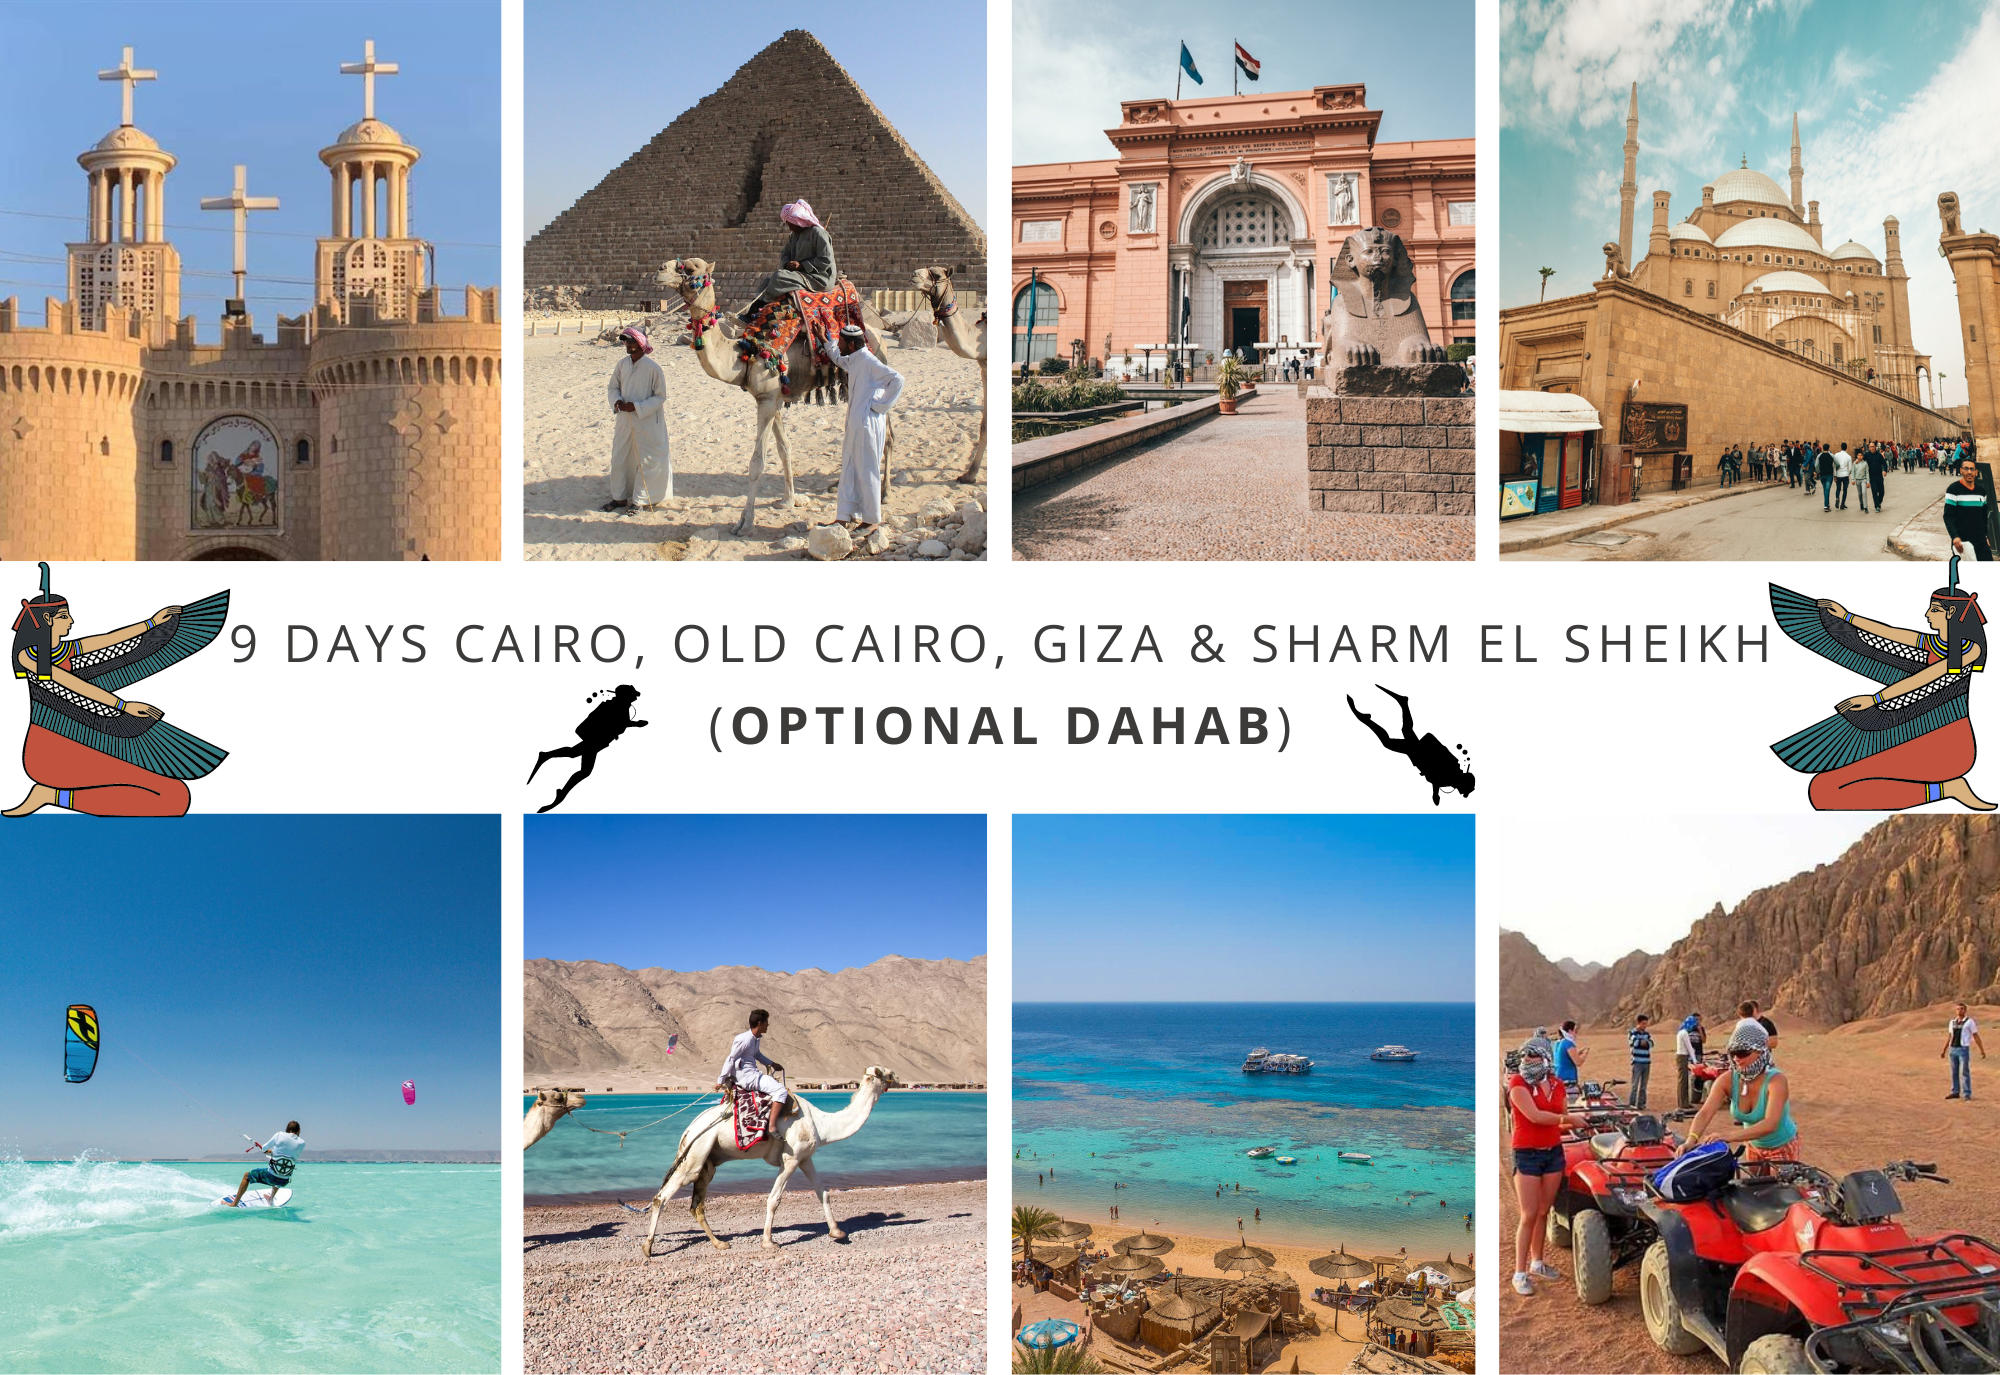 9 Days Cairo, Old Cairo, Giza & Sharm El Sheikh (Optional Dahab)